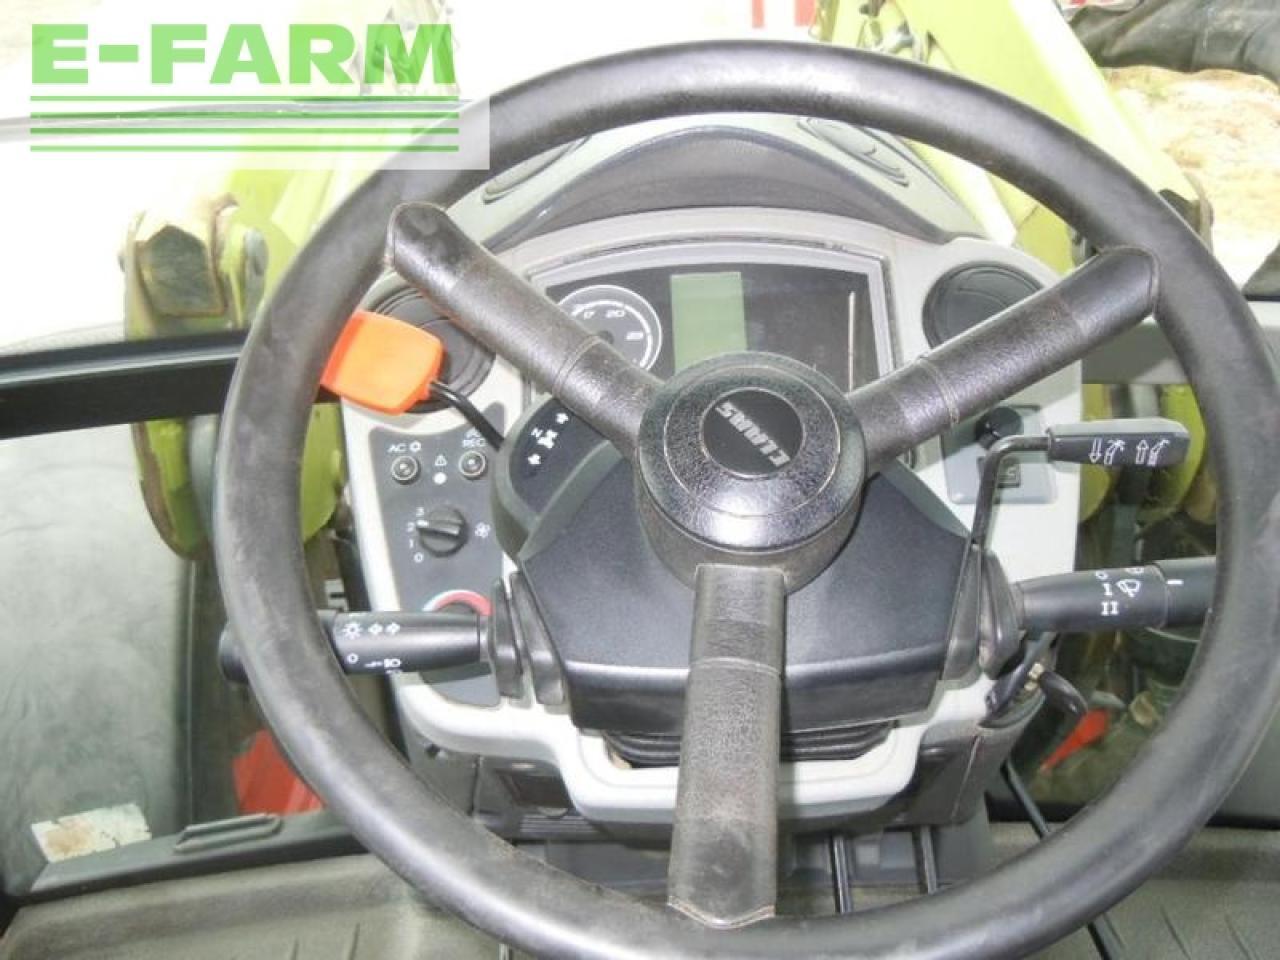 Traktor CLAAS arion 410 cis